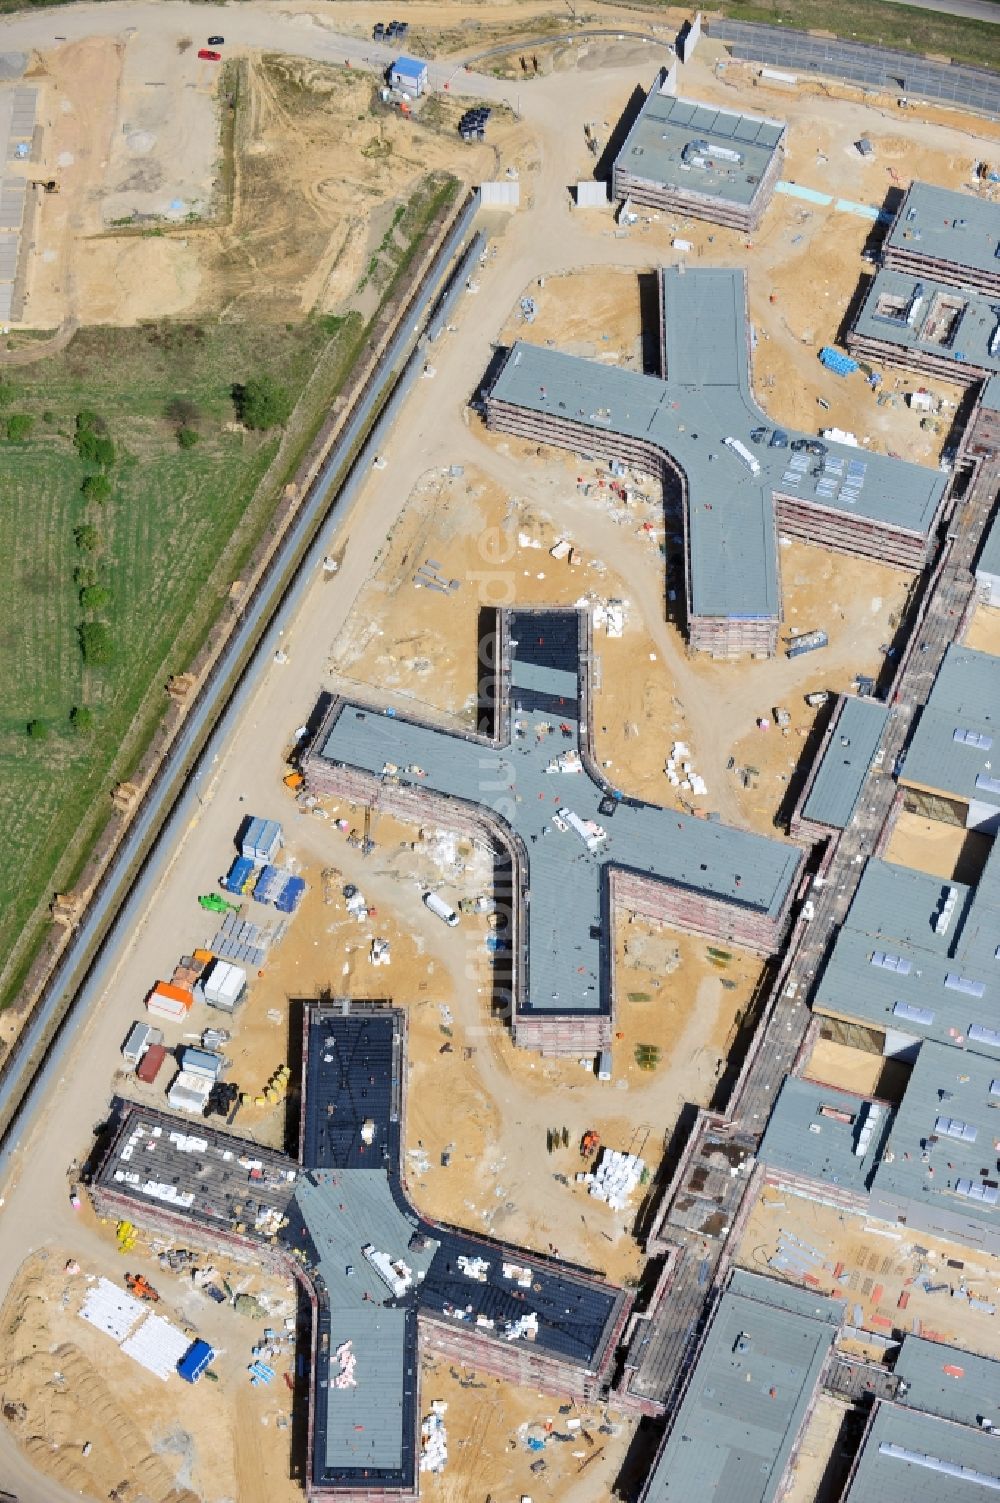 Luftbild Großbeeren - Neubau der Justizvollzugsanstalt Heidering Großbeeren im Bundesland Brandenburg